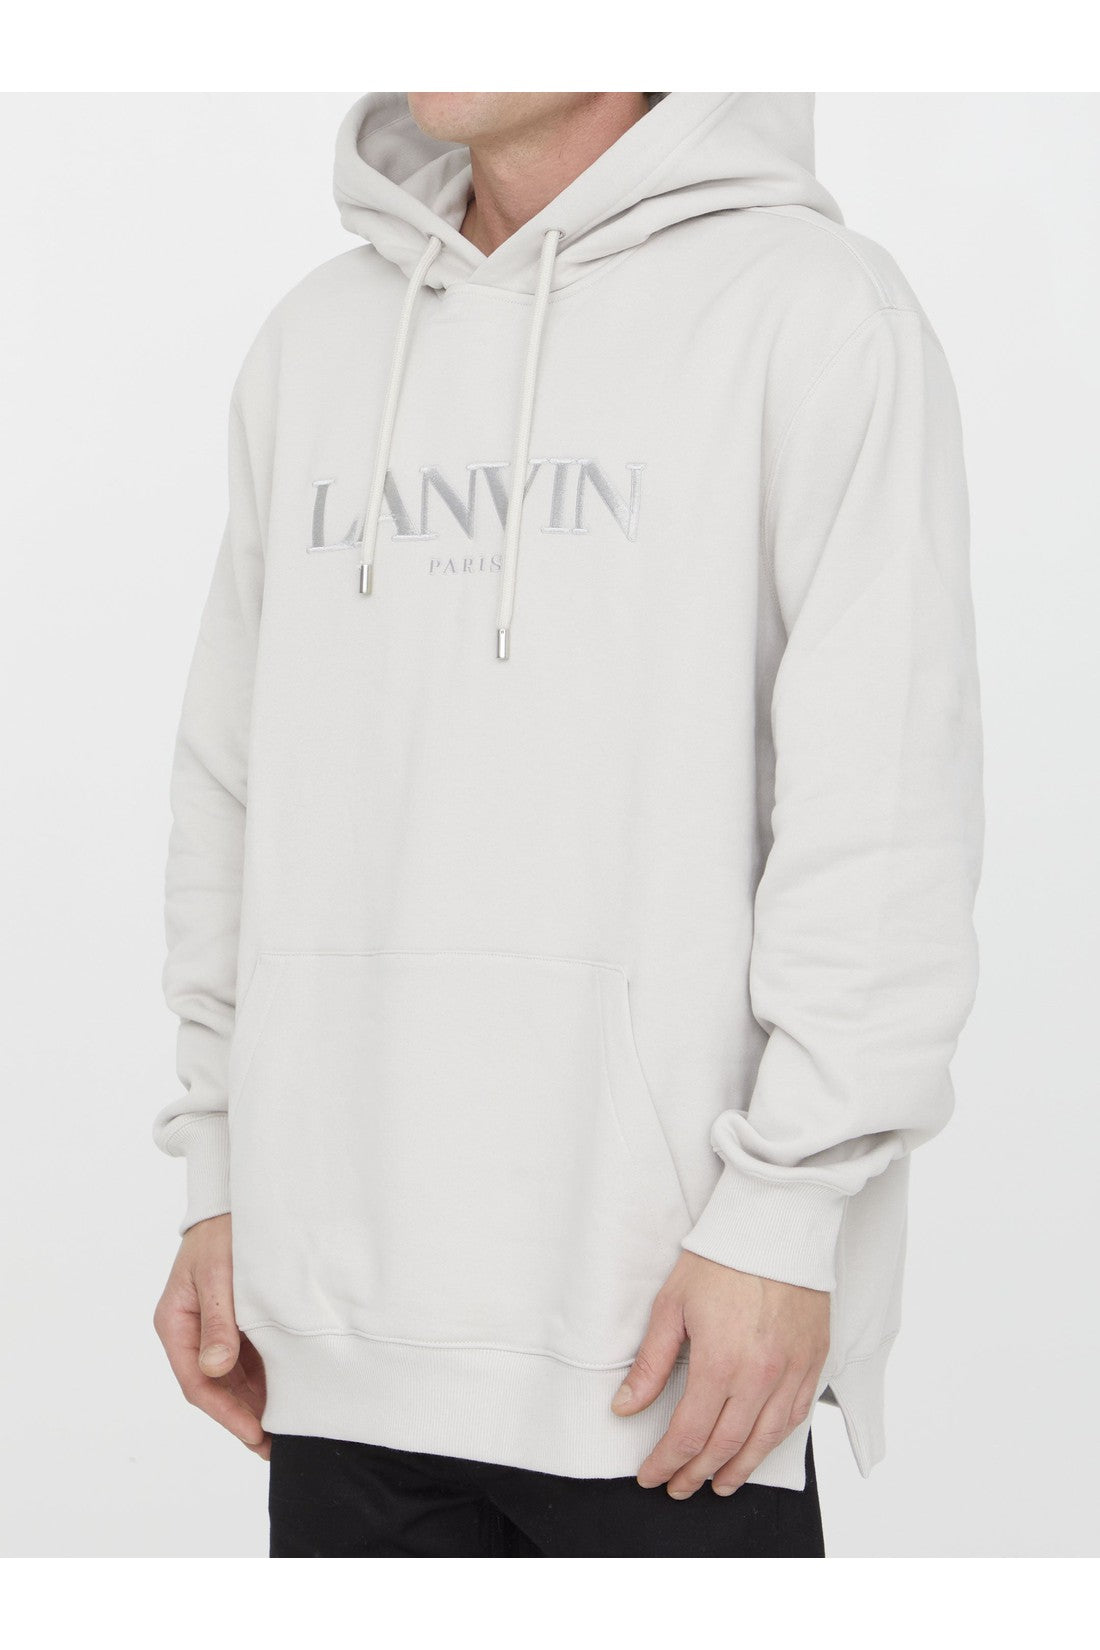 Lanvin Paris hoodie